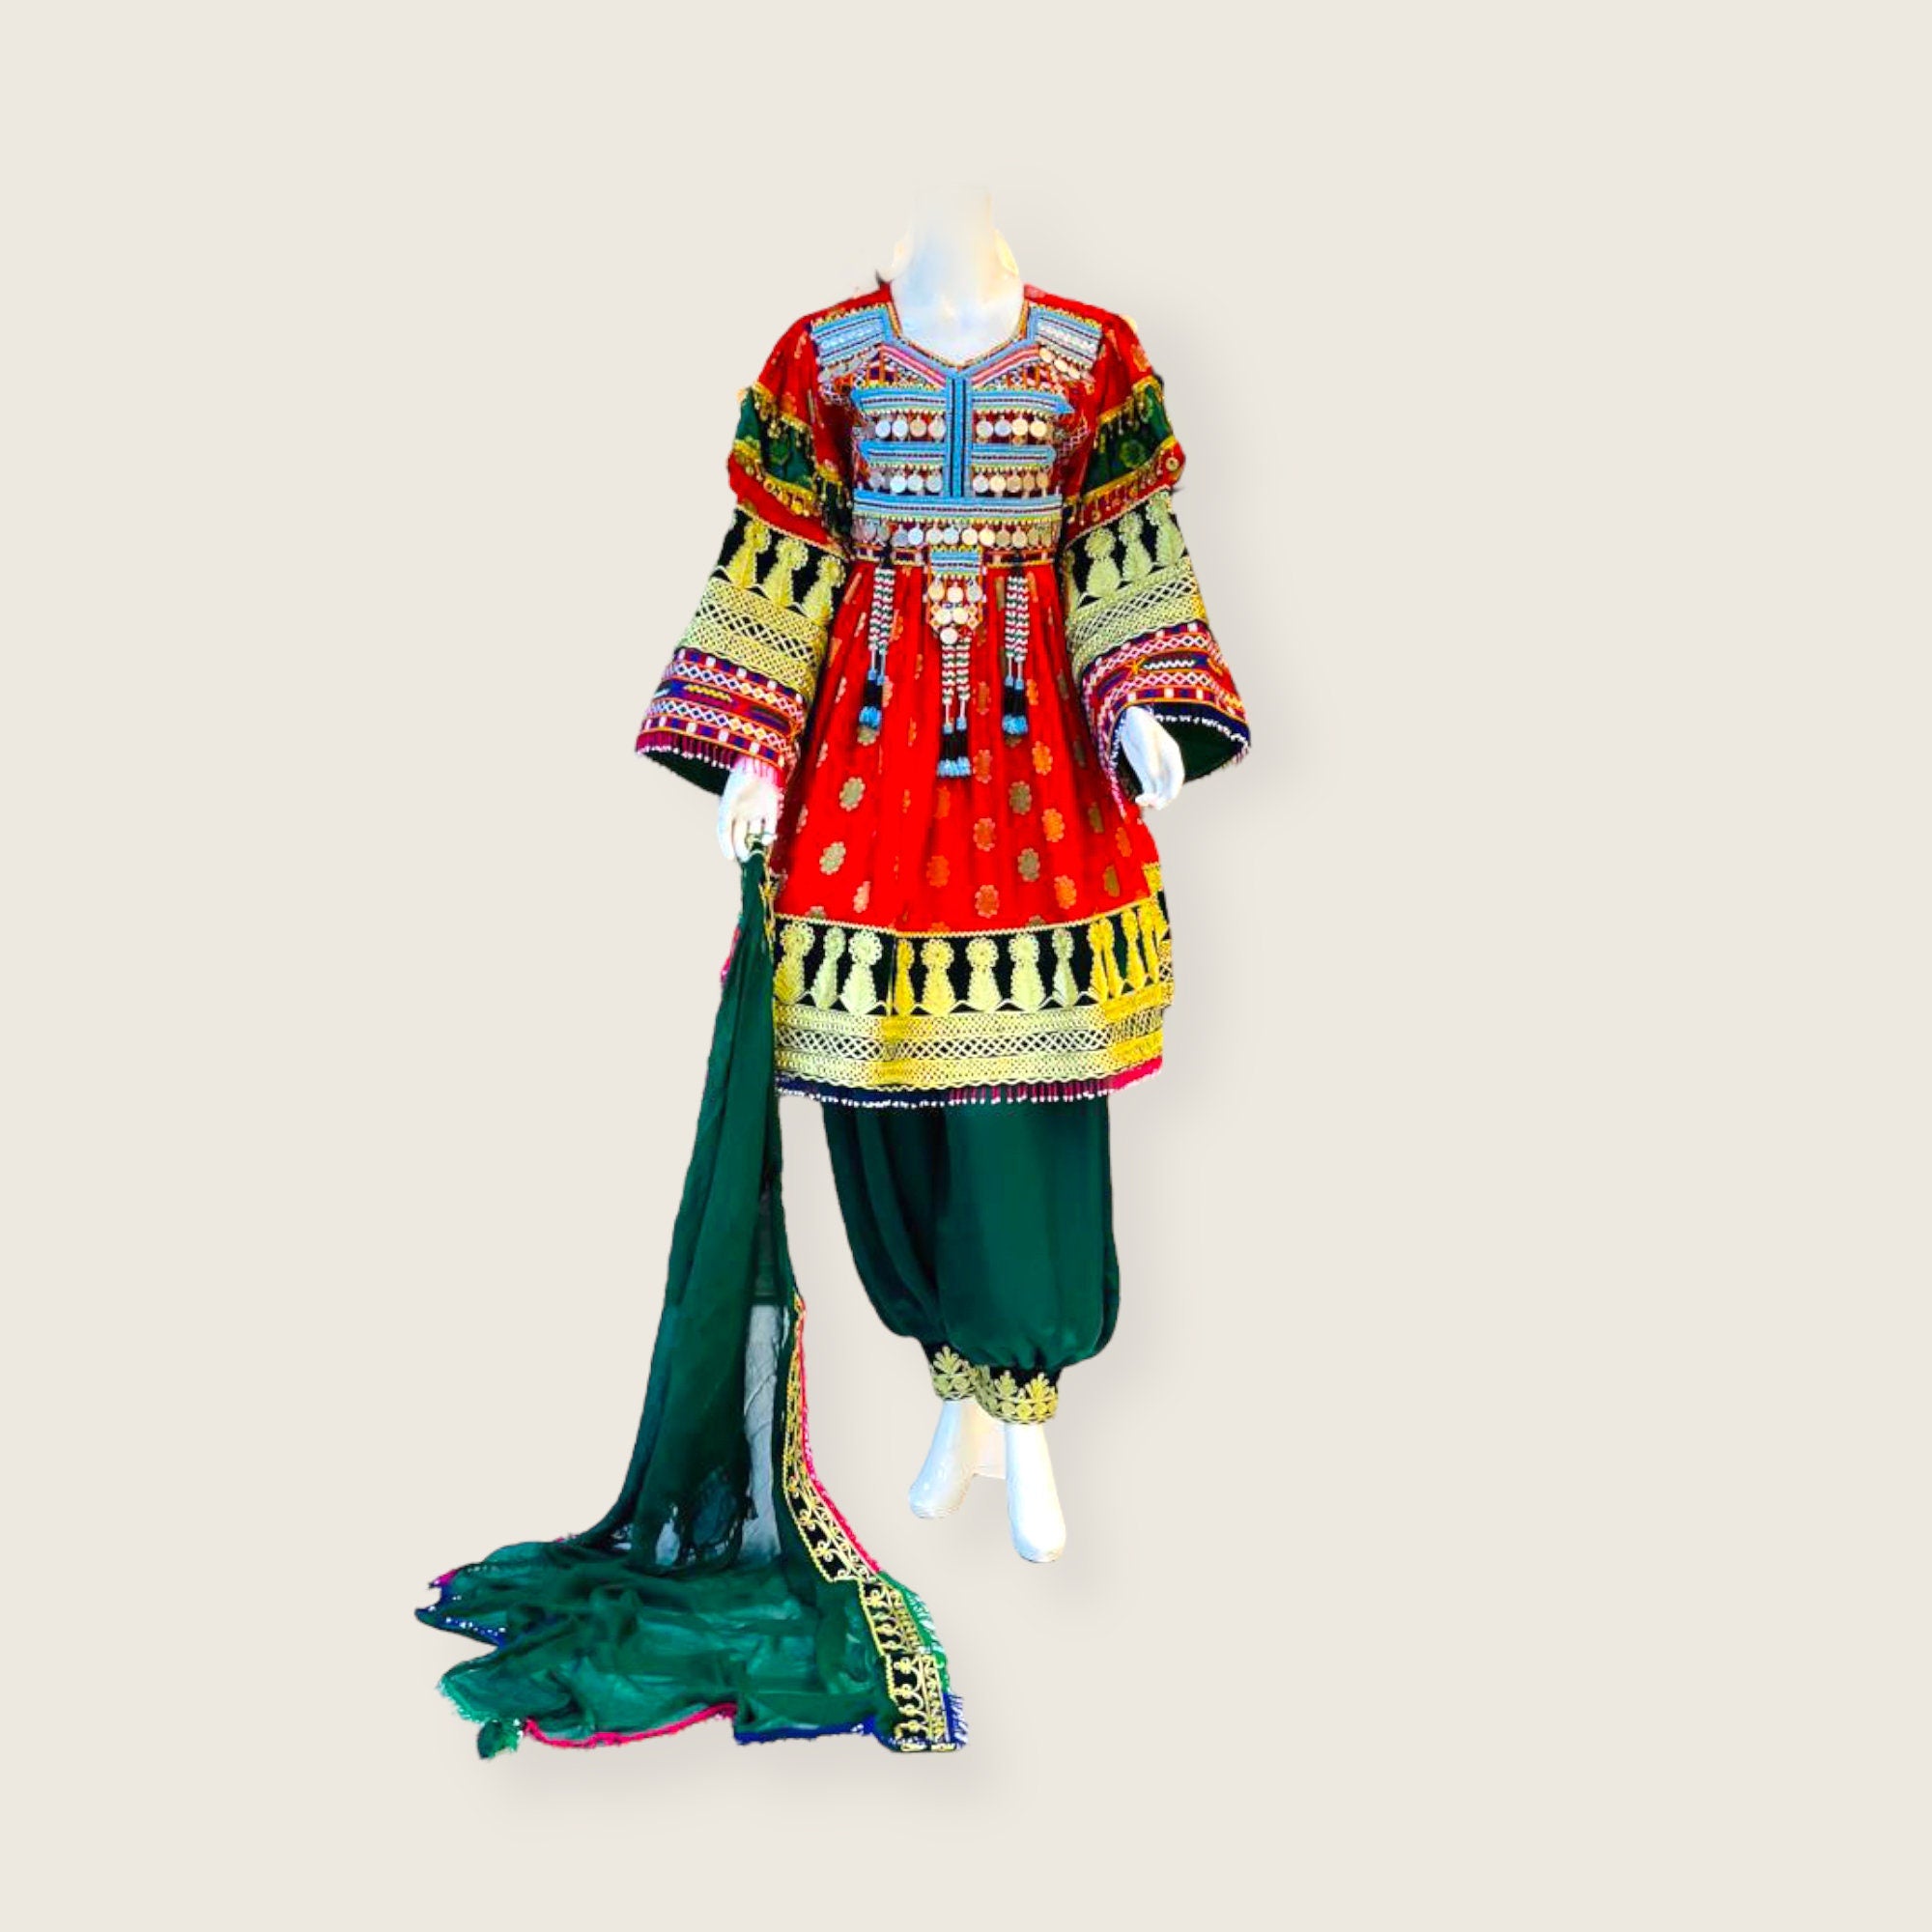 Afghan Dresses & Jewellery - Afghan Clothes